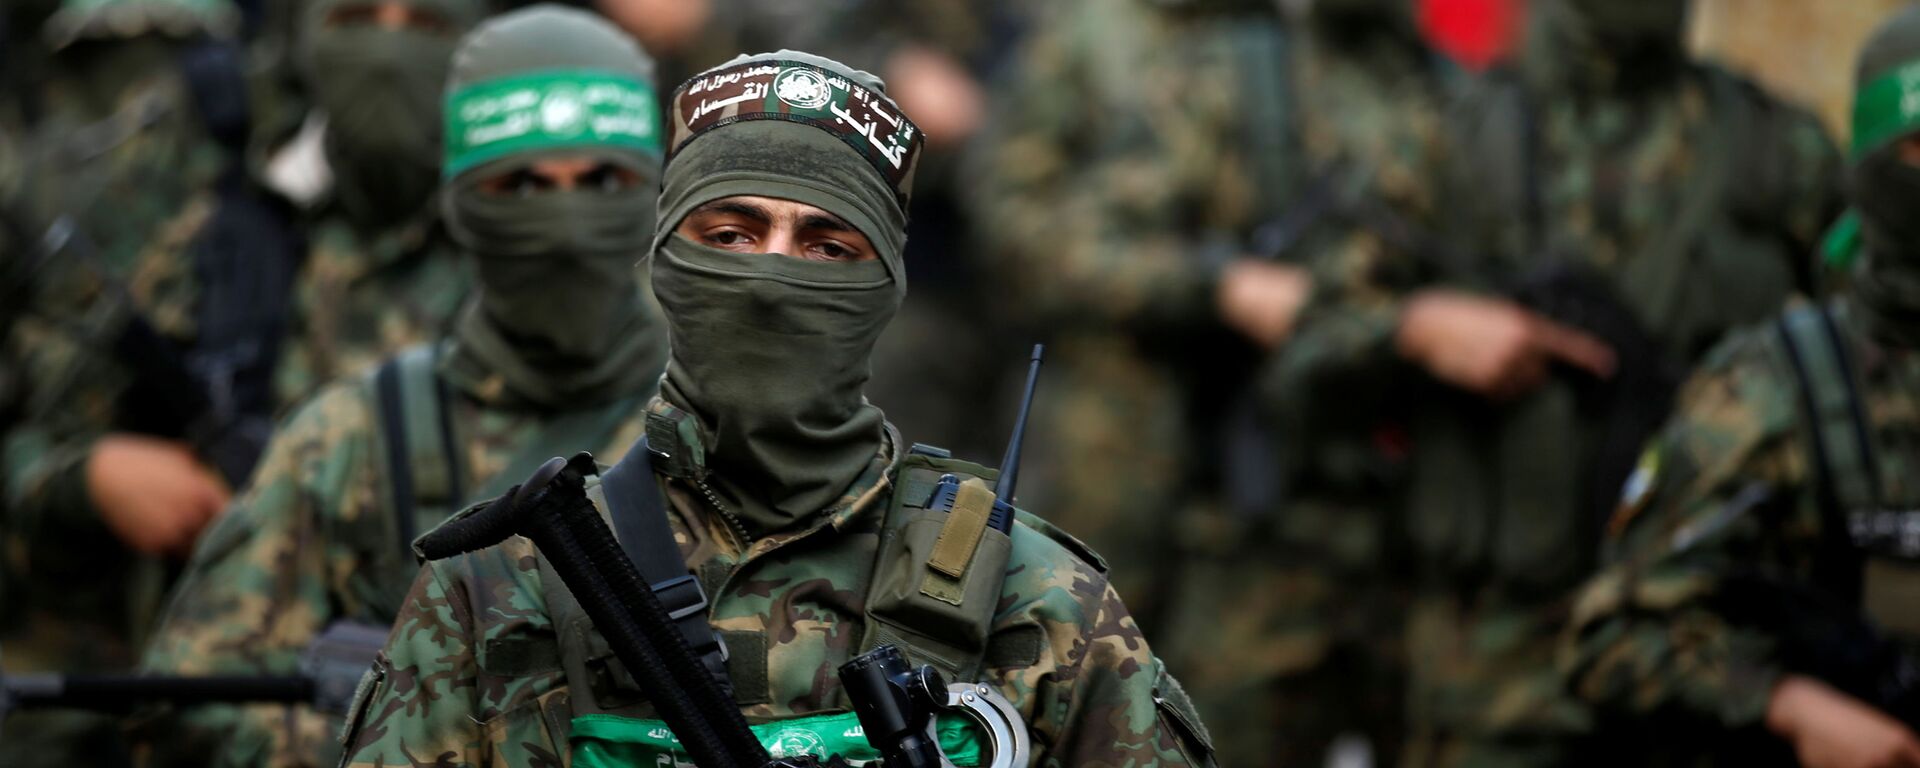 Palestinian Hamas militants take part in an anti-Israel rally in Gaza City May 22, 2021. REUTERS/Mohammed Salem - Sputnik International, 1920, 22.05.2021